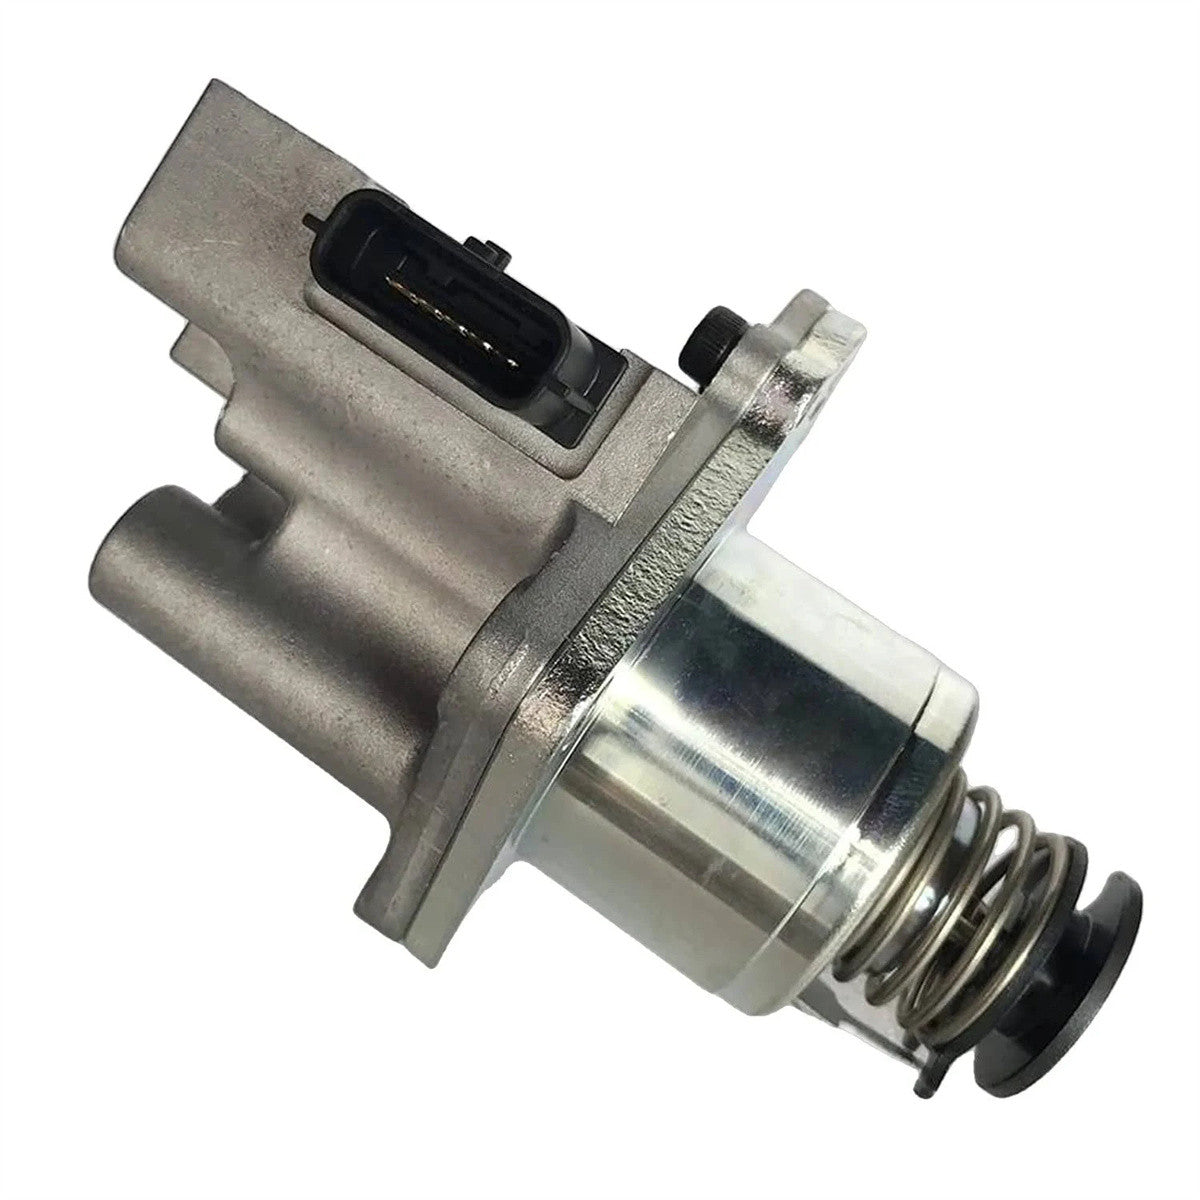 129927-61601 729975-51310 Fuel Pump Rack Actuator for Yanmar Engine 3TNV88 4TNV98